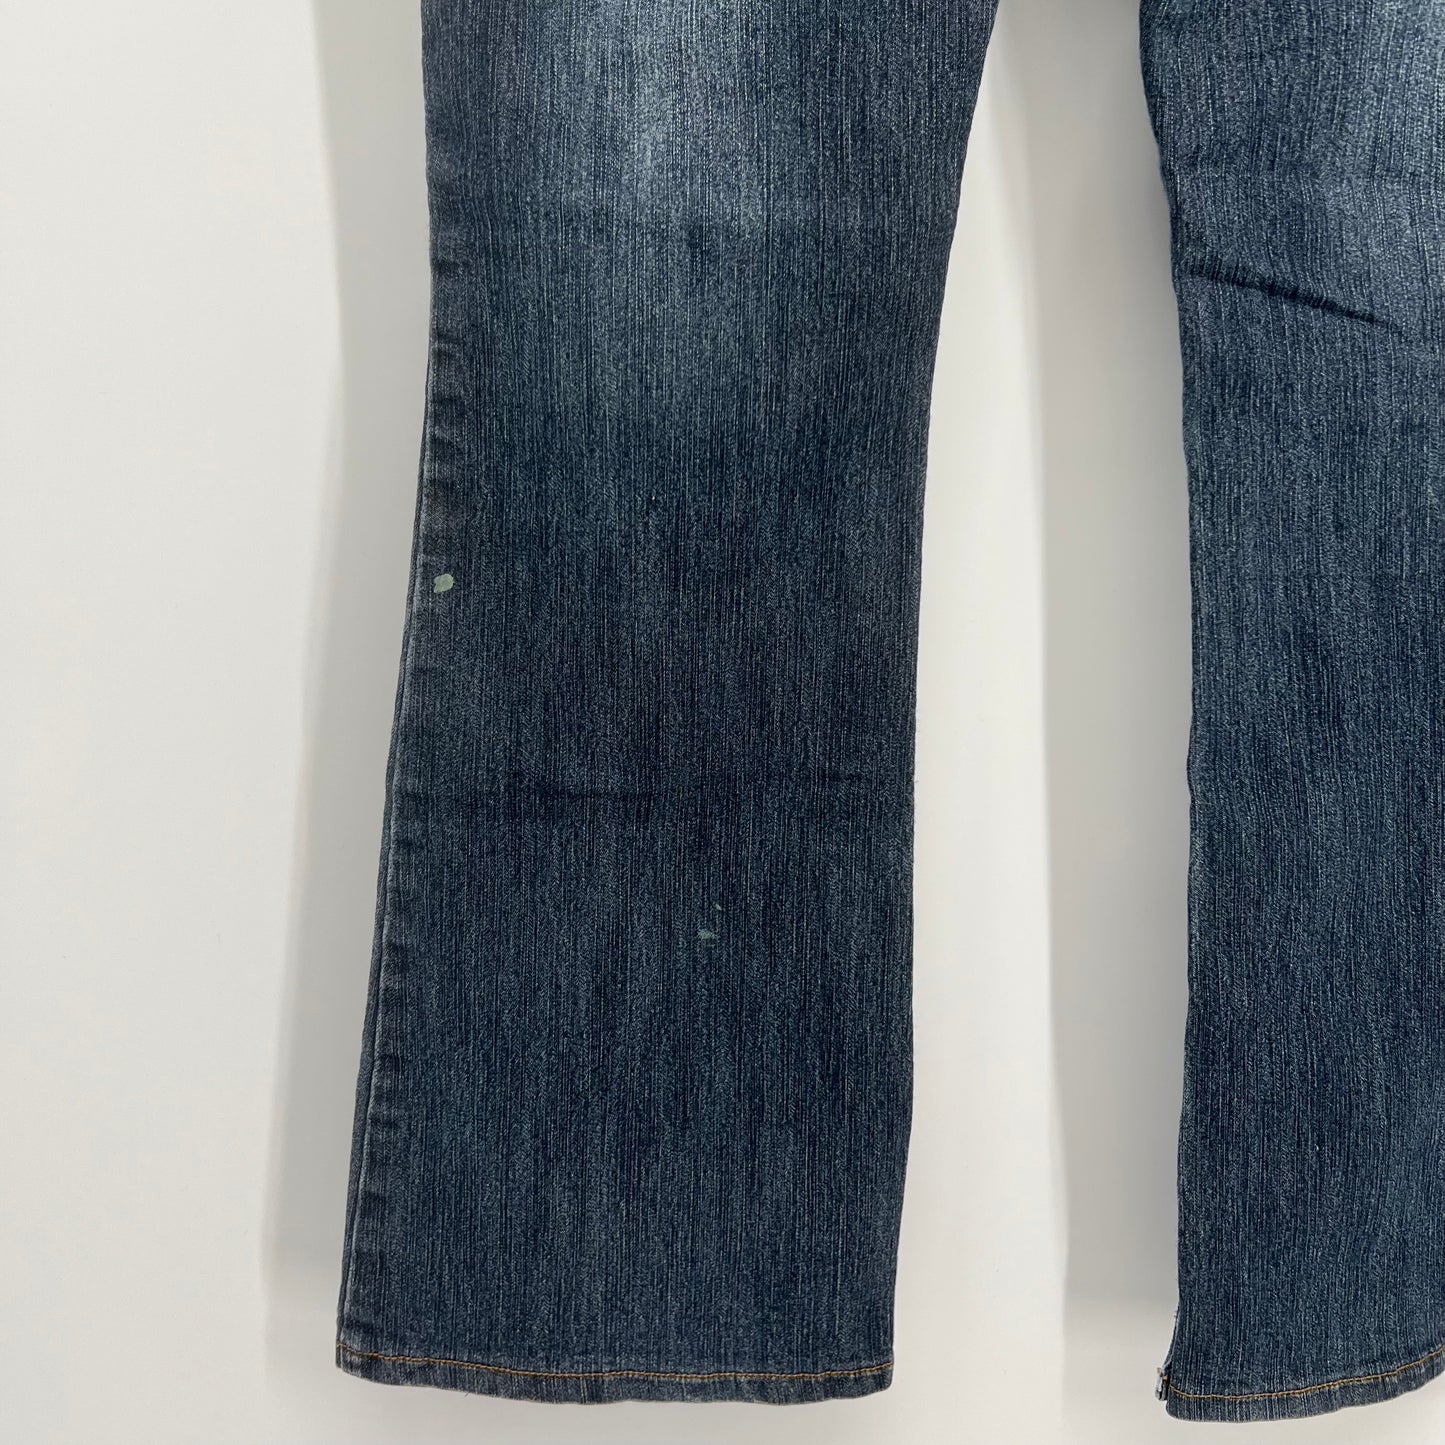 Vintage Y2K Grunge Belted Zana Di Low Rise Bootcut Jeans Sz: 9